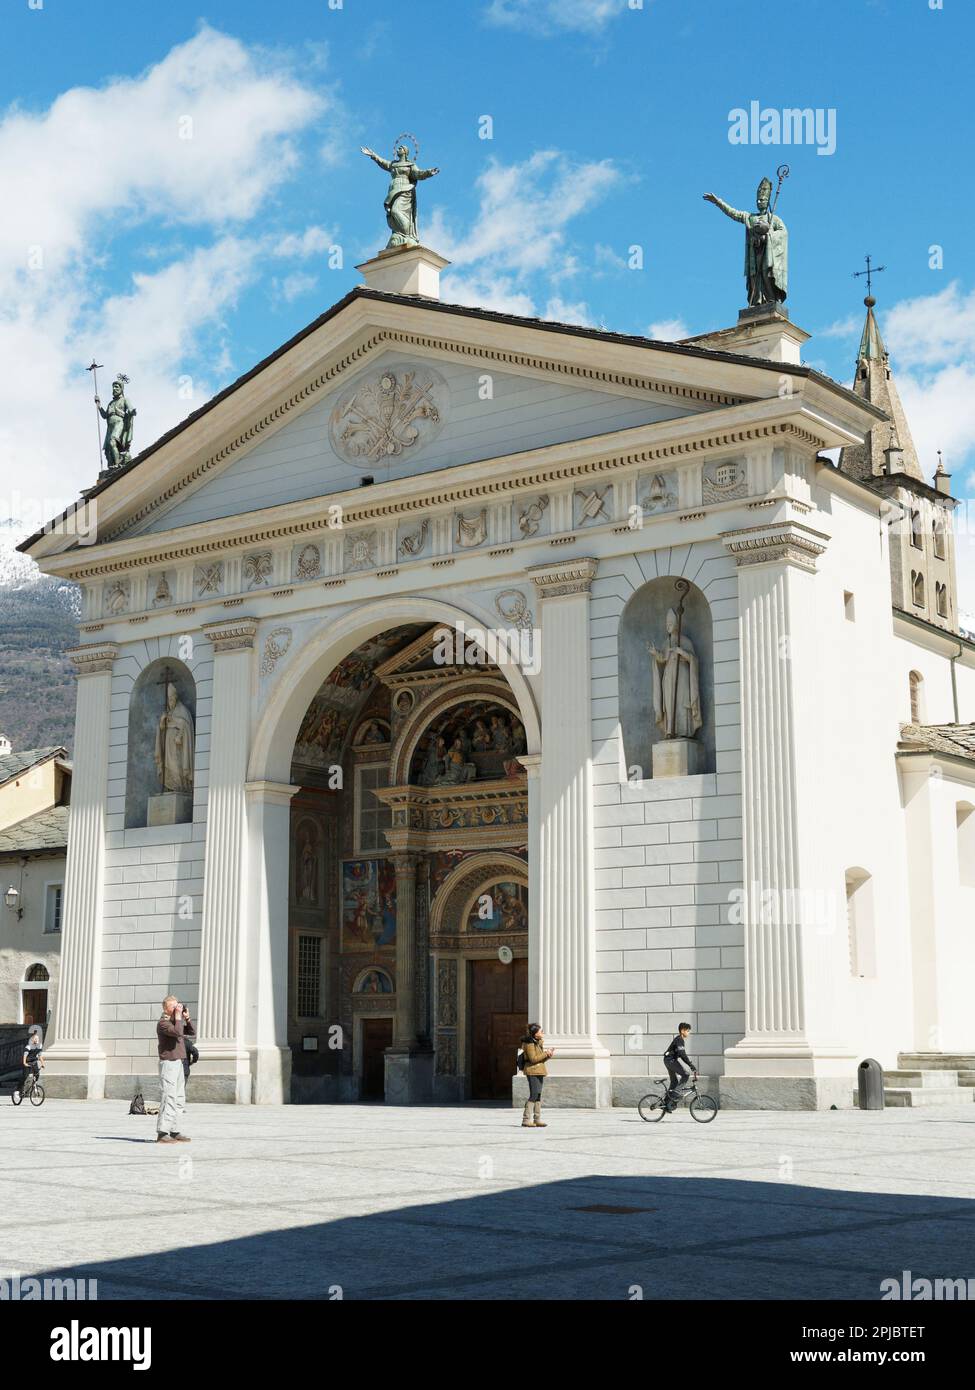 Entrance to the Santa Maria Assunta Cathedral in the city of Aosta, Aosta Valley, Italy Stock Photo